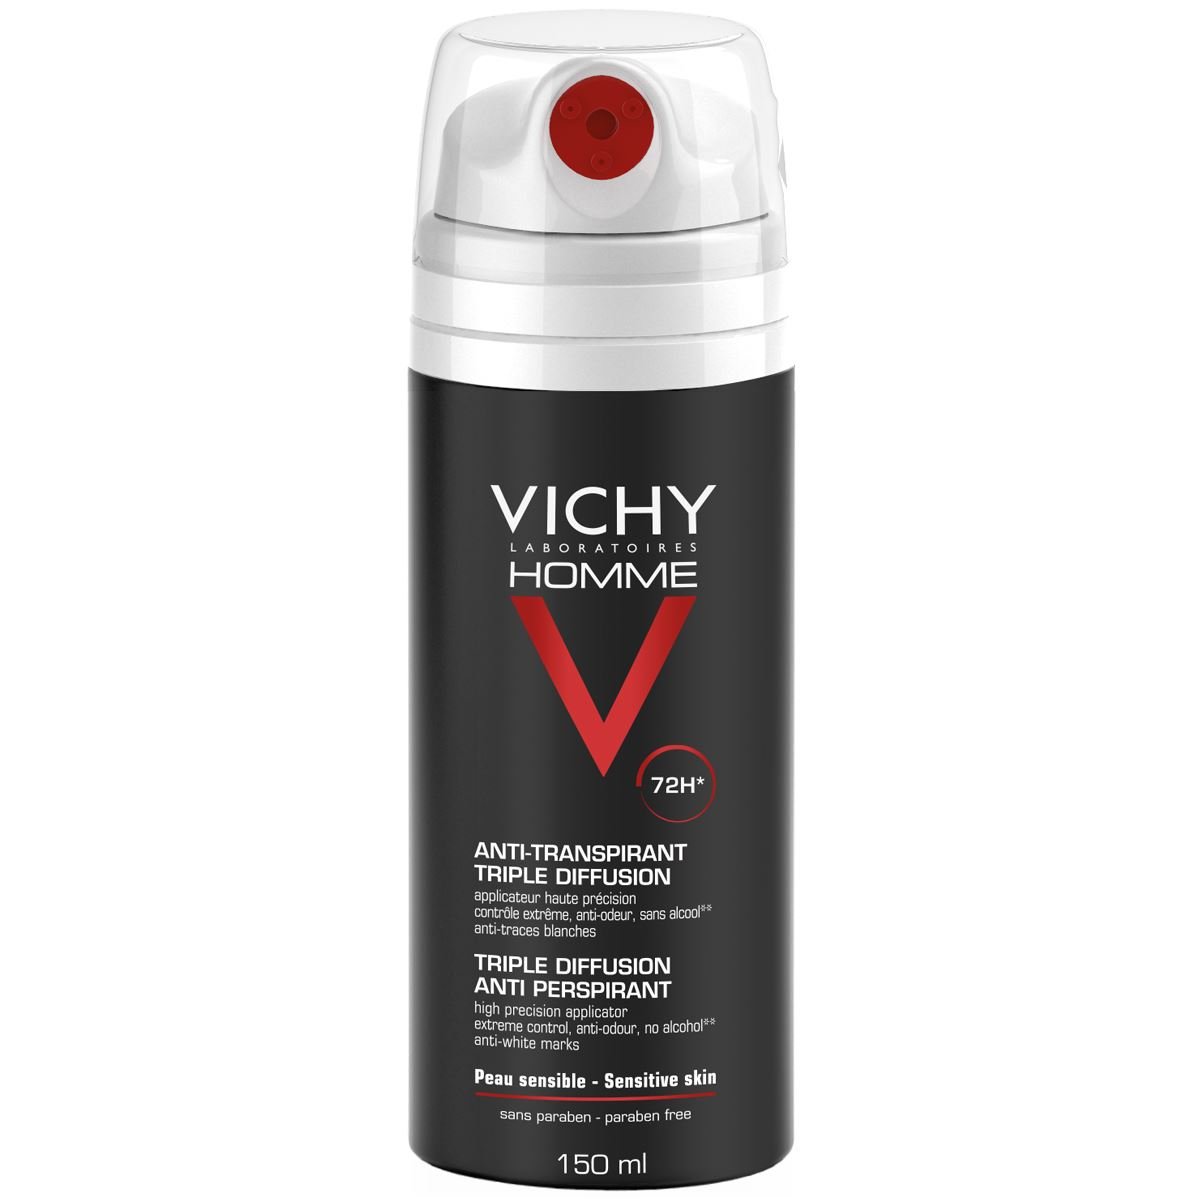 Vichy Homme Deo Spray 72h 150ml 15